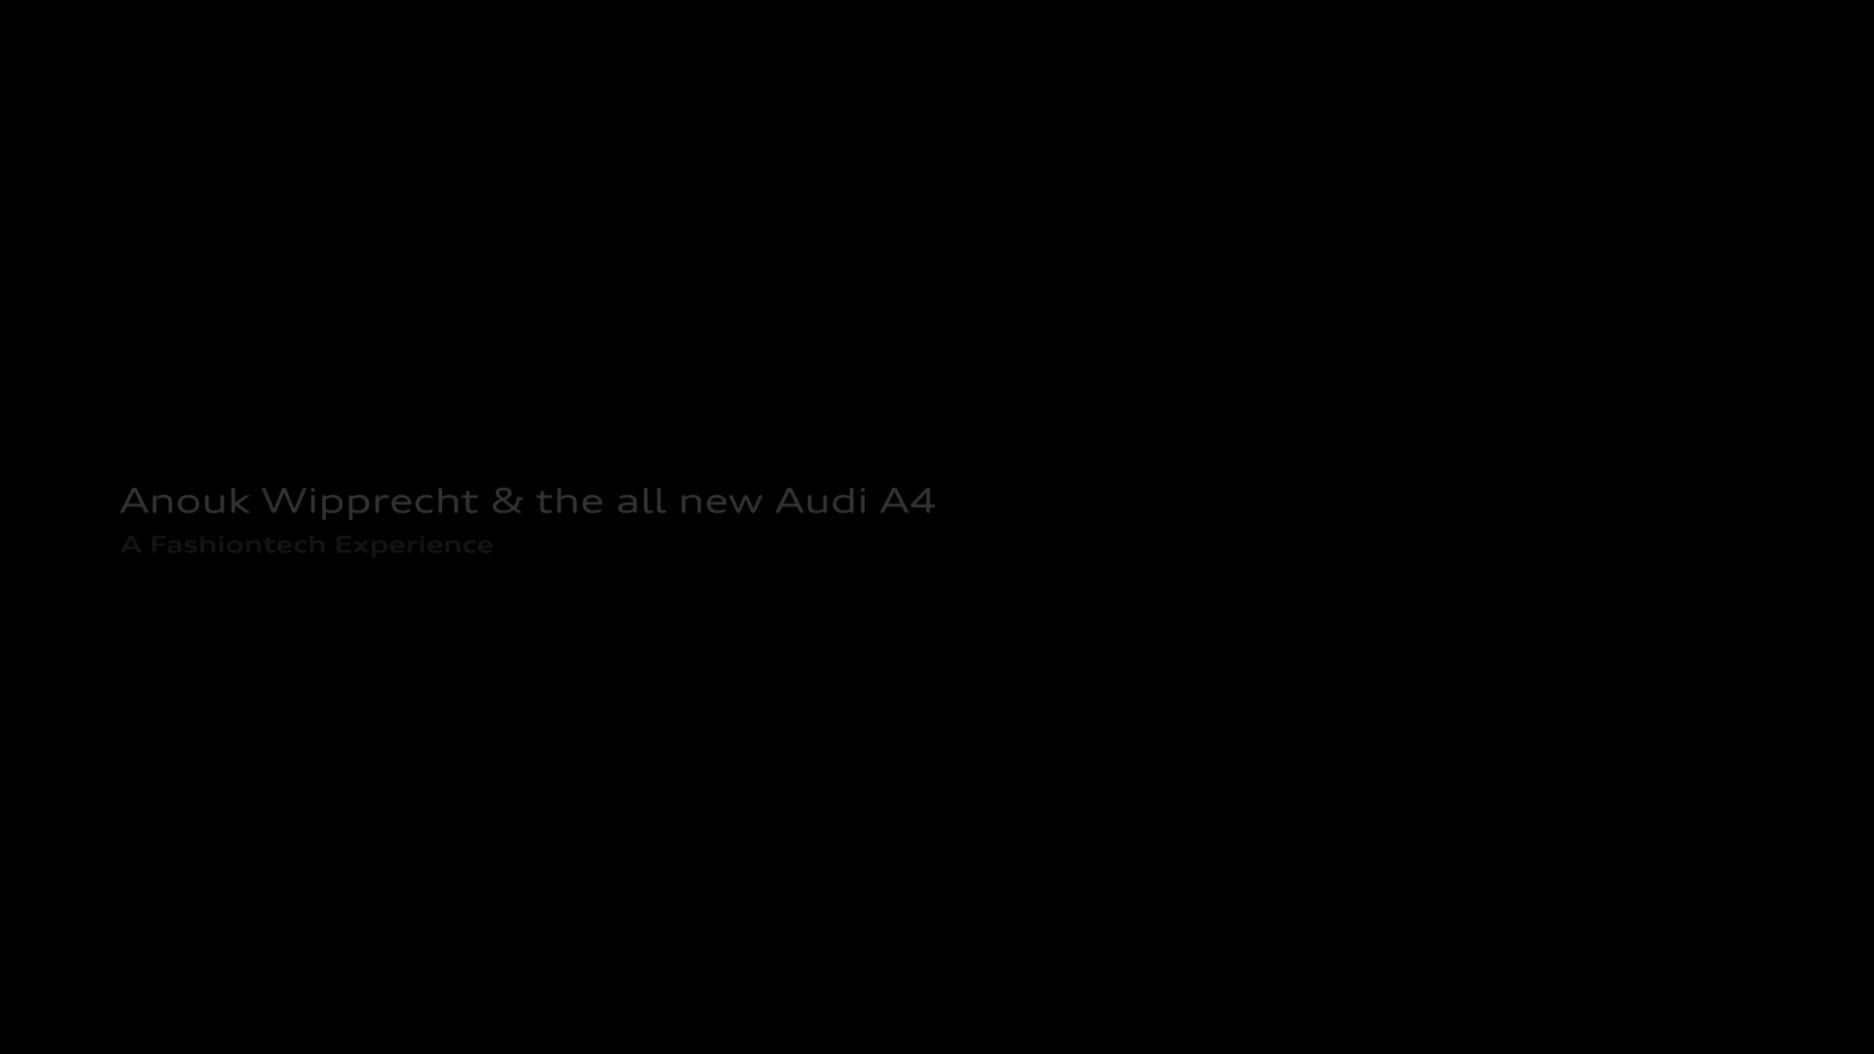 Anouk Wipprecht & the all new Audi A4